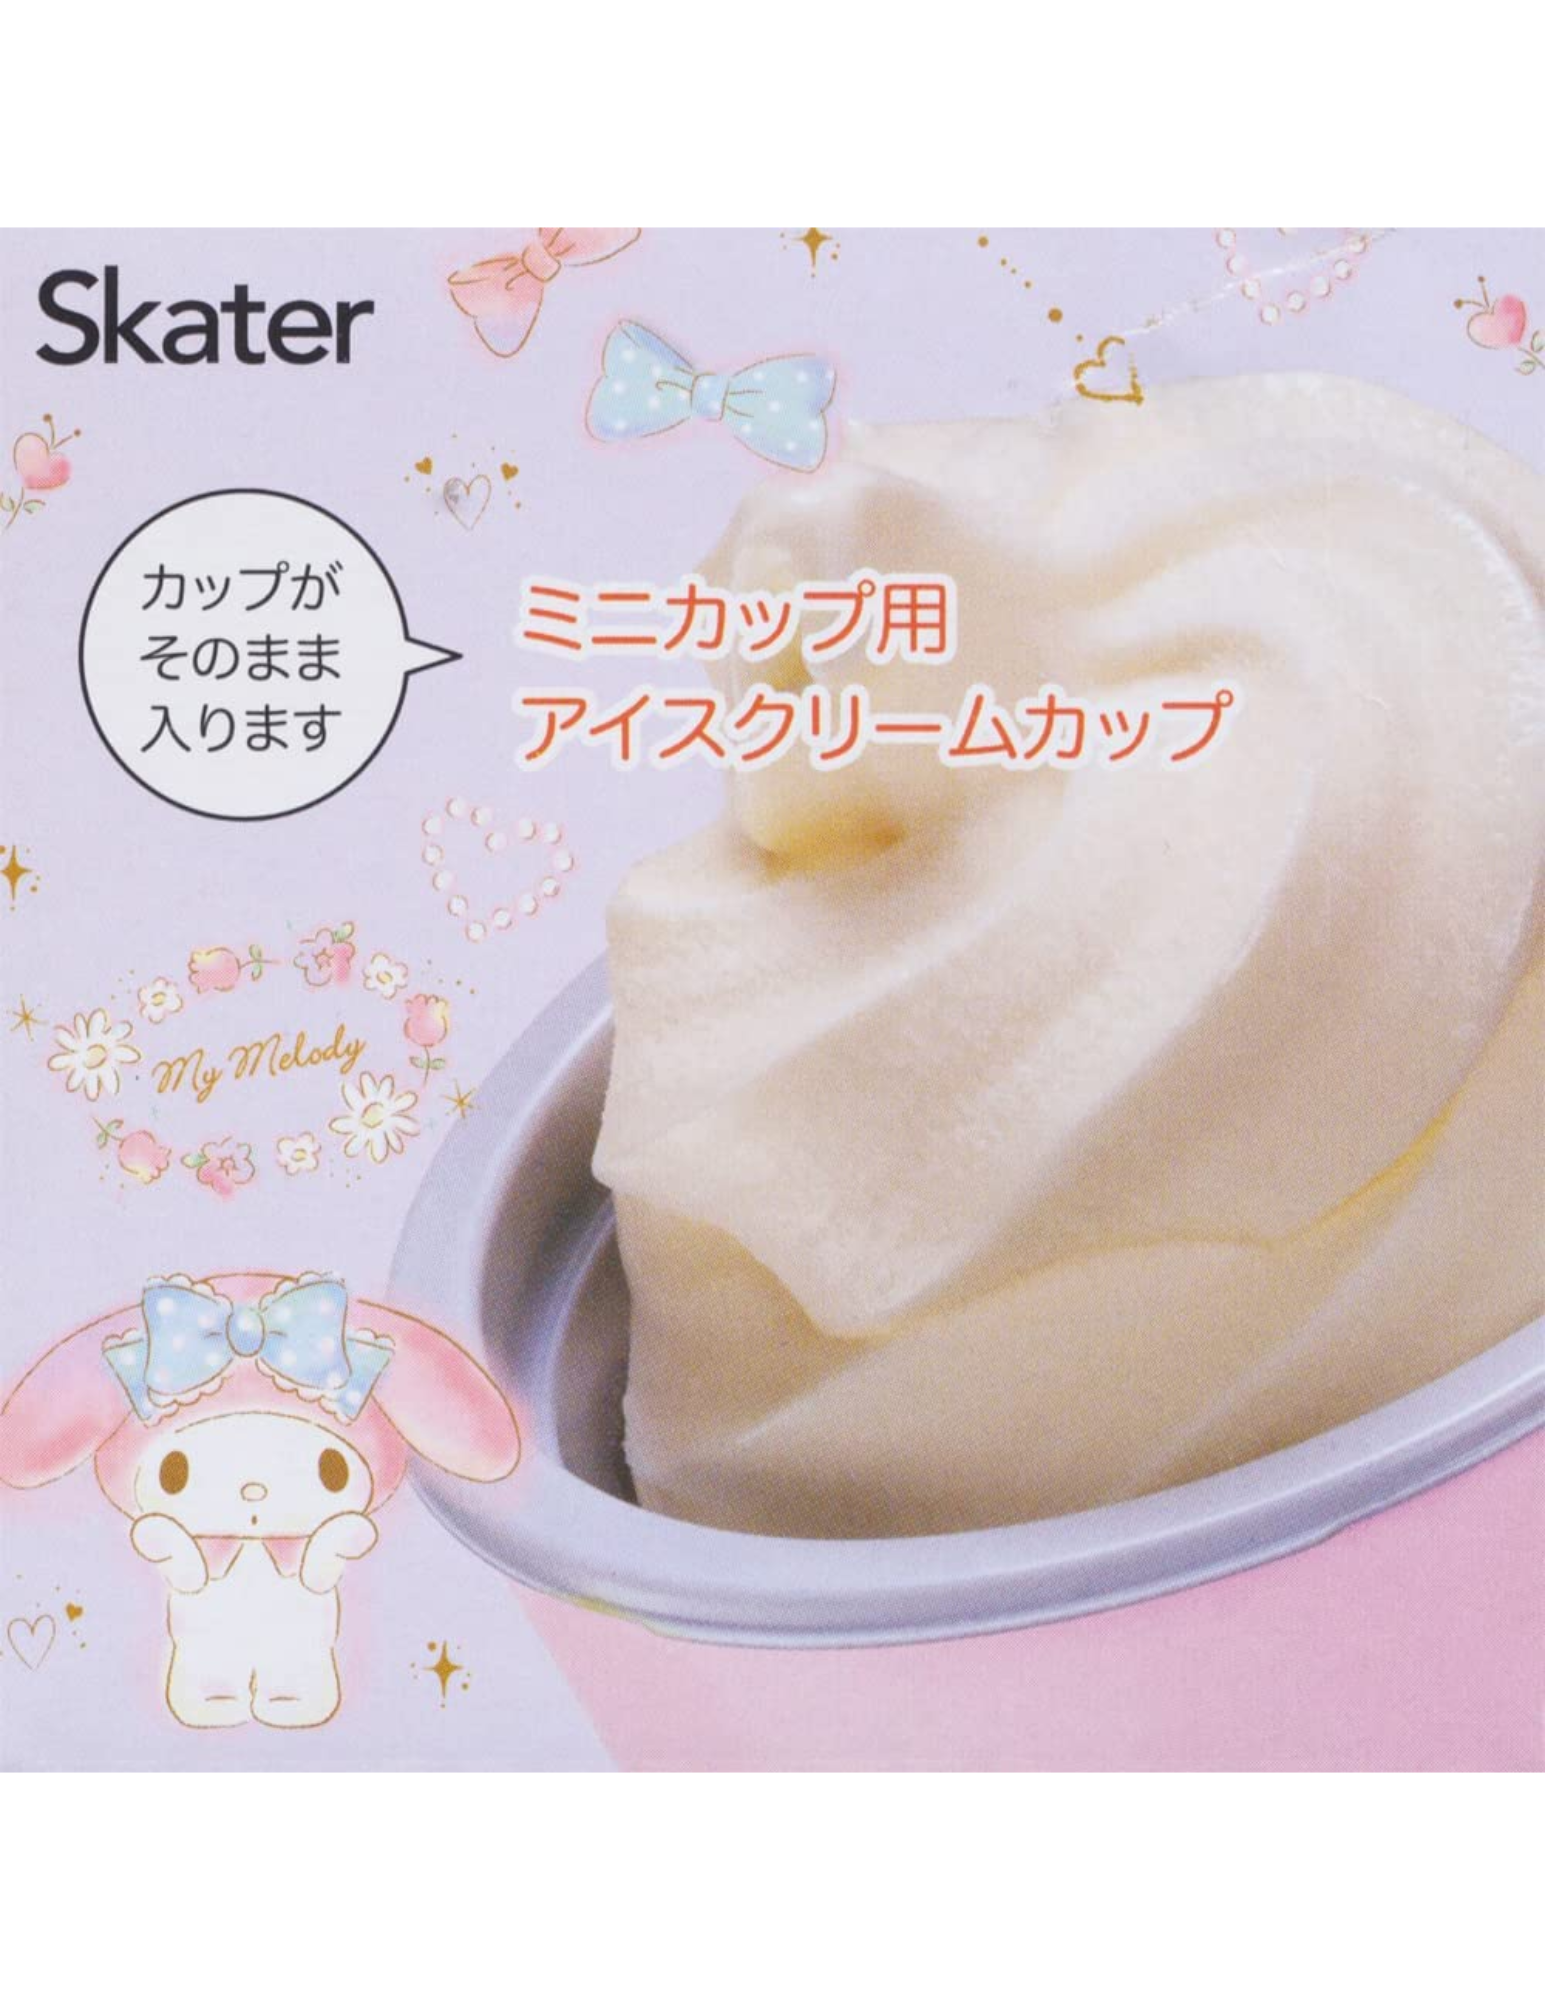 SKATER Insulated Ice Cream Bowl – Unique Bunny